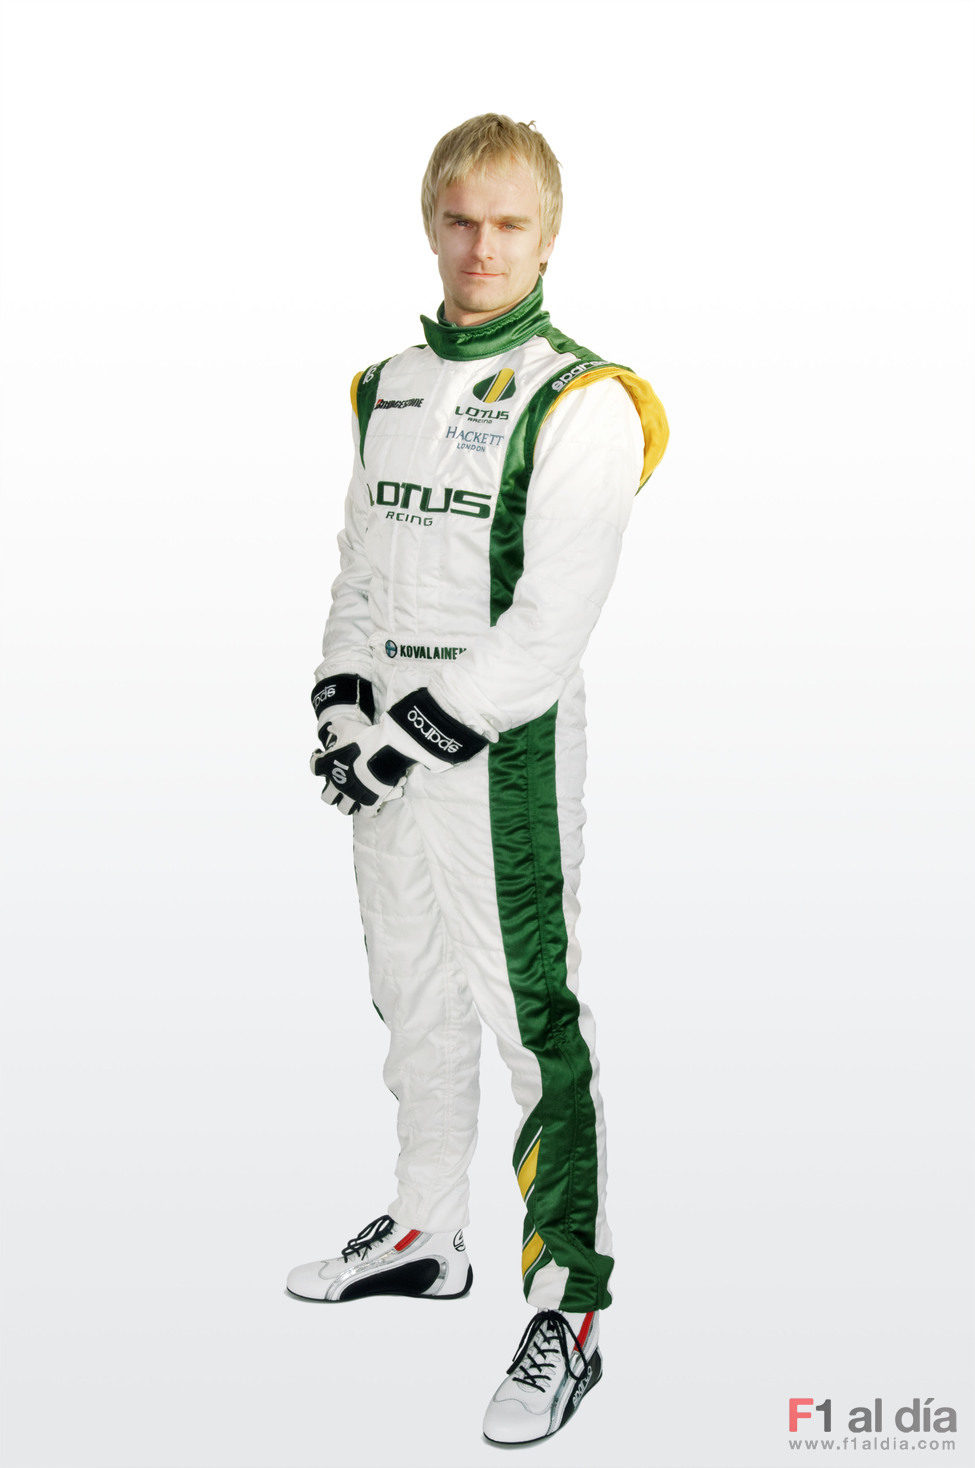 Heikki Kovalainen, piloto de Lotus